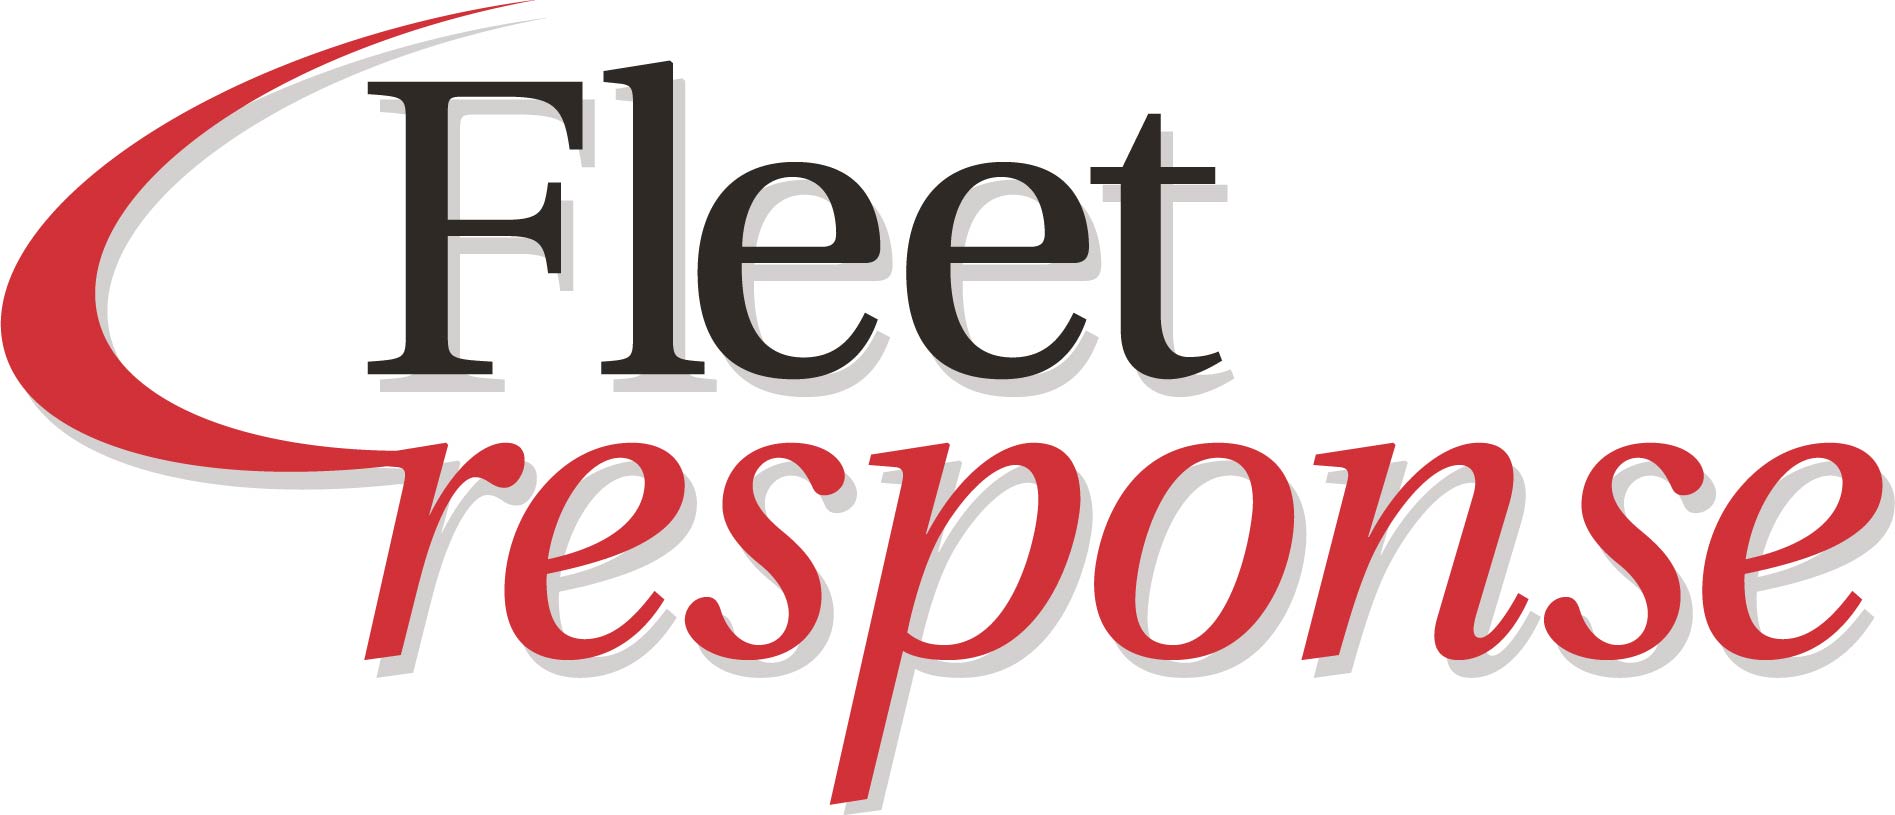 2_Fleet Response Logo